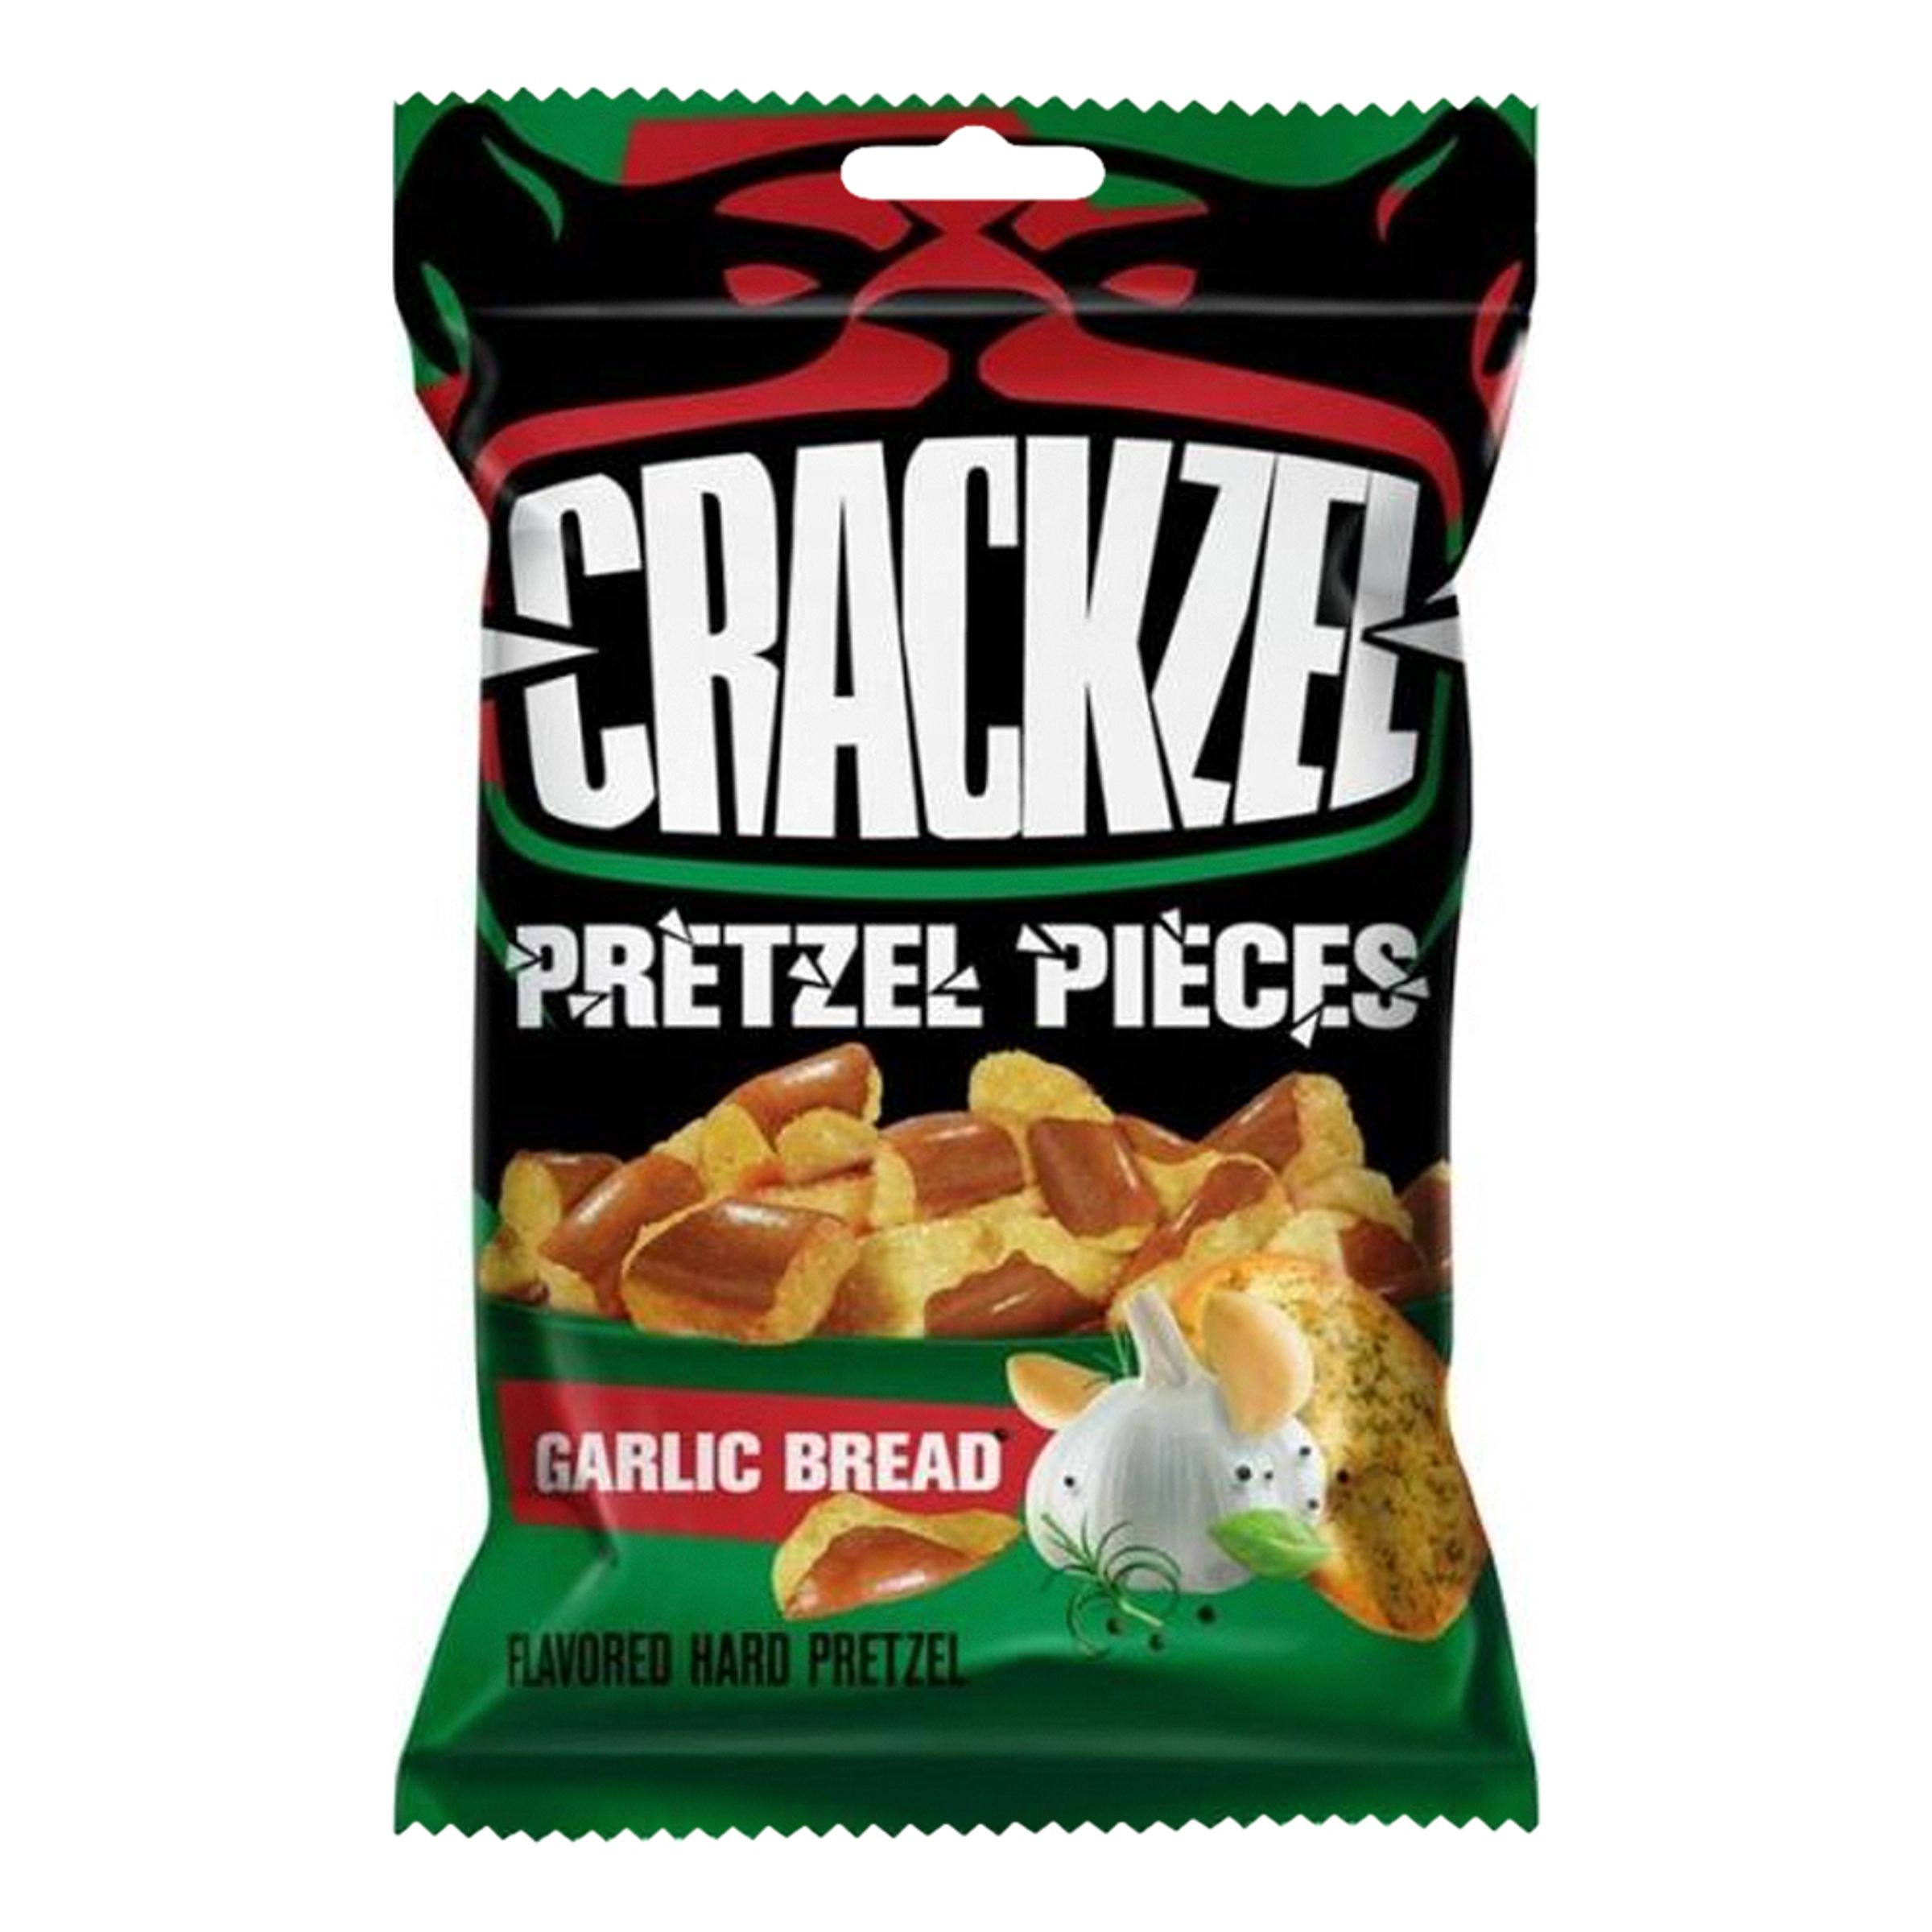 Crackzel Pretzel Pieces Garlic Bread - 85 gram